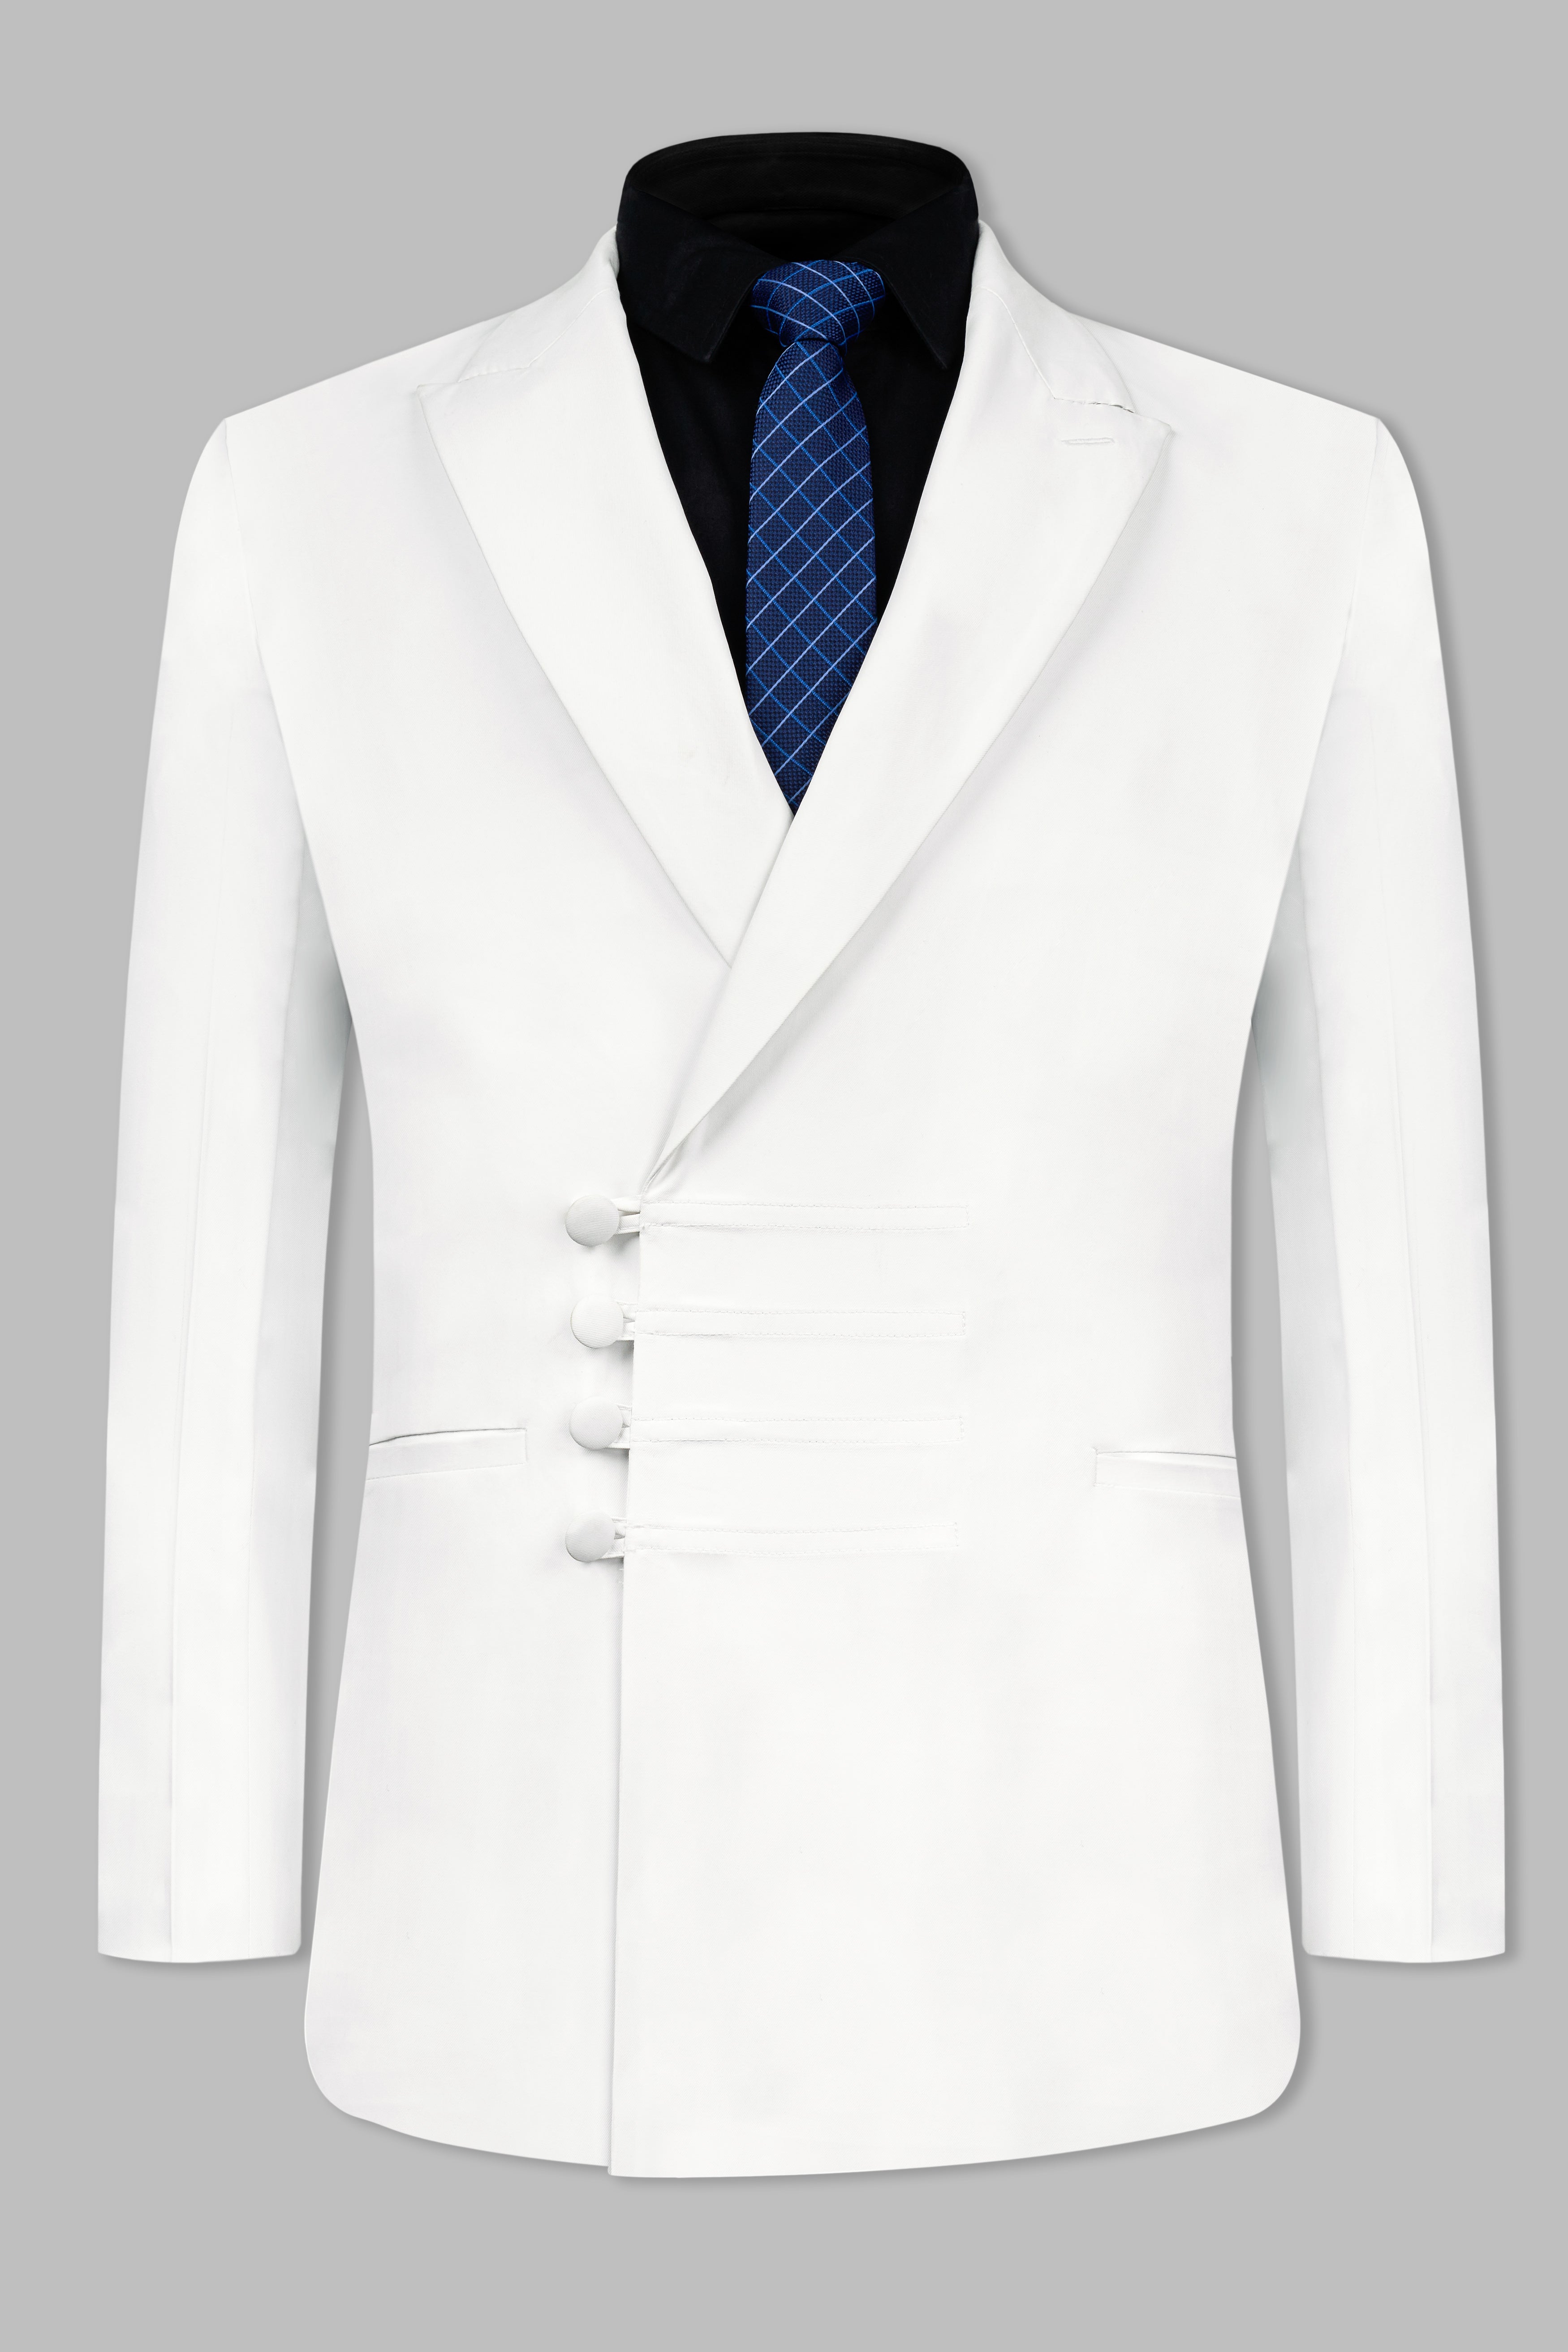 Bright White Wool Rich Designer Suit ST2798-SBP-FB-D272-36, ST2798-SBP-FB-D272-38, ST2798-SBP-FB-D272-40, ST2798-SBP-FB-D272-42, ST2798-SBP-FB-D272-44, ST2798-SBP-FB-D272-46, ST2798-SBP-FB-D272-48, ST2798-SBP-FB-D272-50, ST2798-SBP-FB-D272-52, ST2798-SBP-FB-D272-54, ST2798-SBP-FB-D272-56, ST2798-SBP-FB-D272-58, ST2798-SBP-FB-D272-60